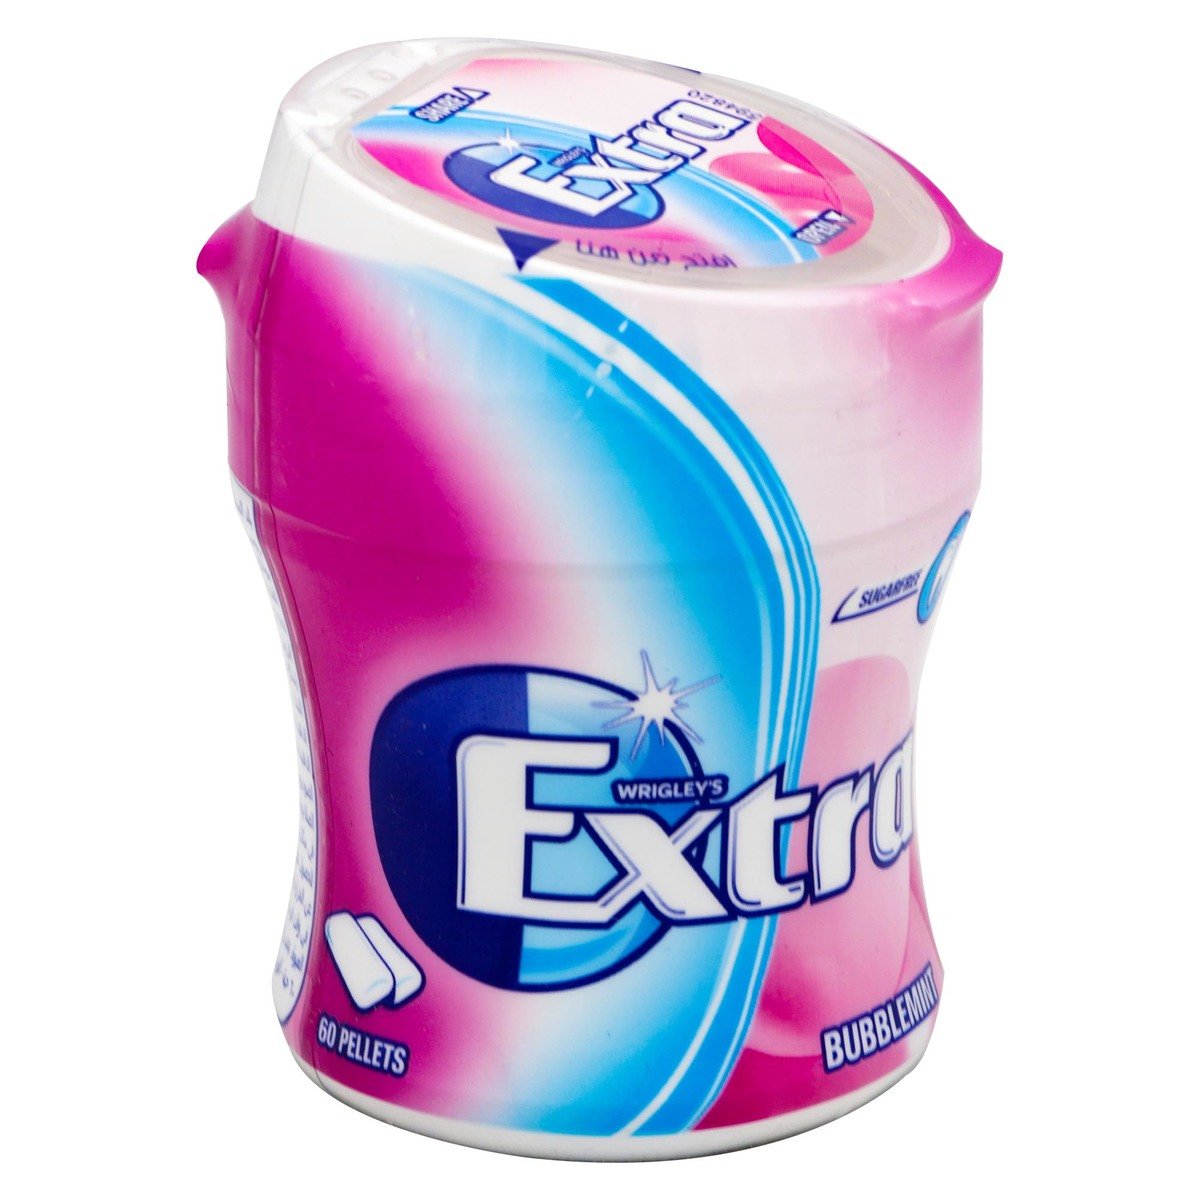 Wrigley's Extra Bubble Mint Gum 60 pcs